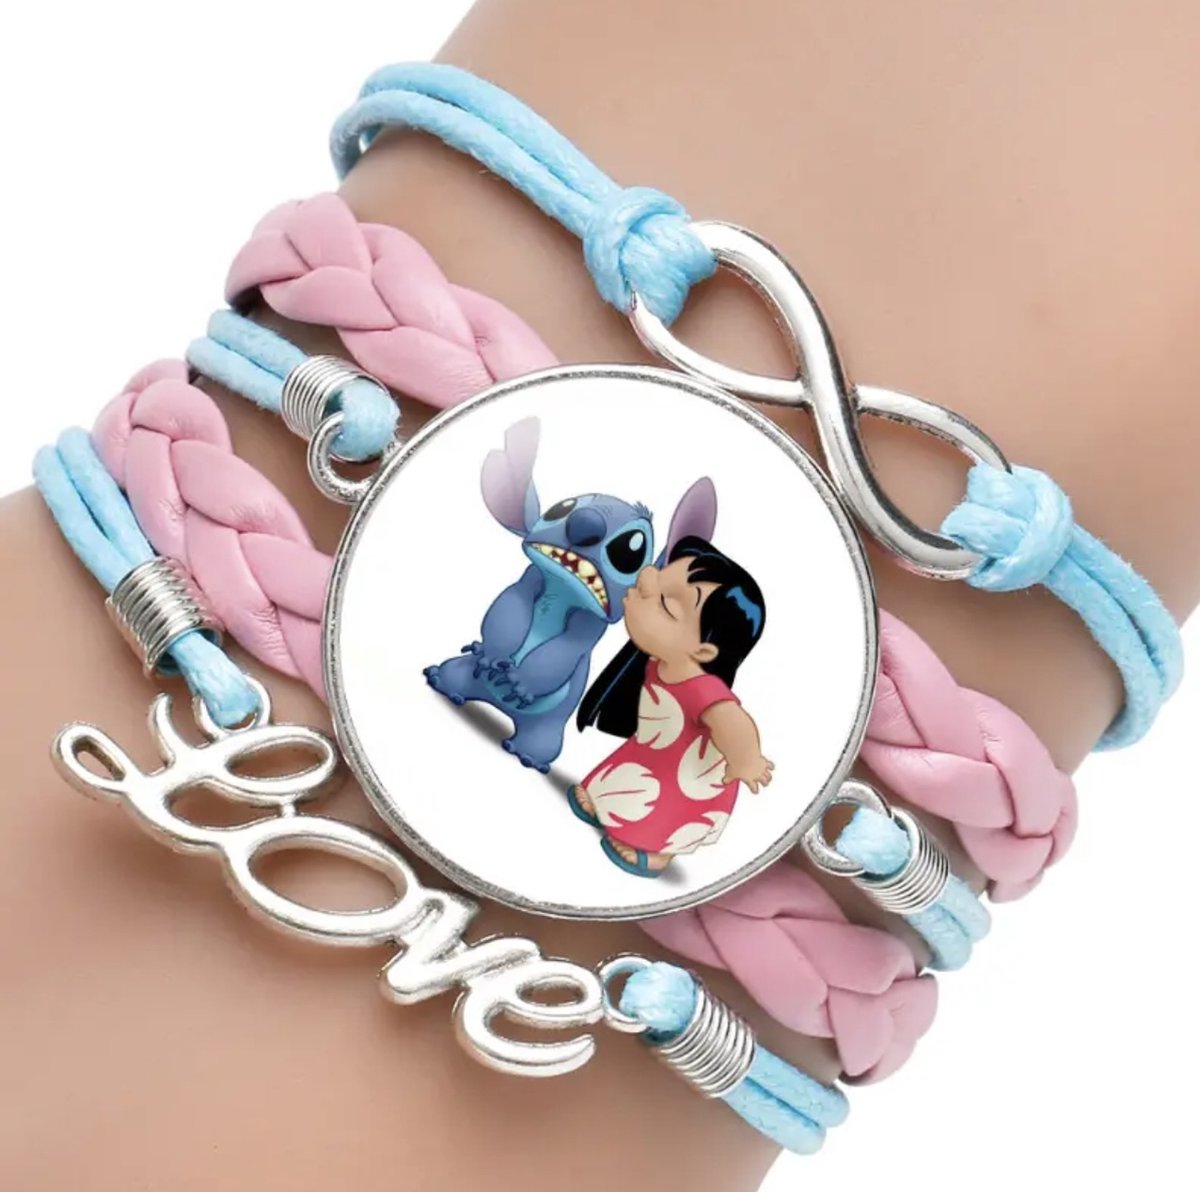 Lilo & Stitch armbandje met bedel roze blauw